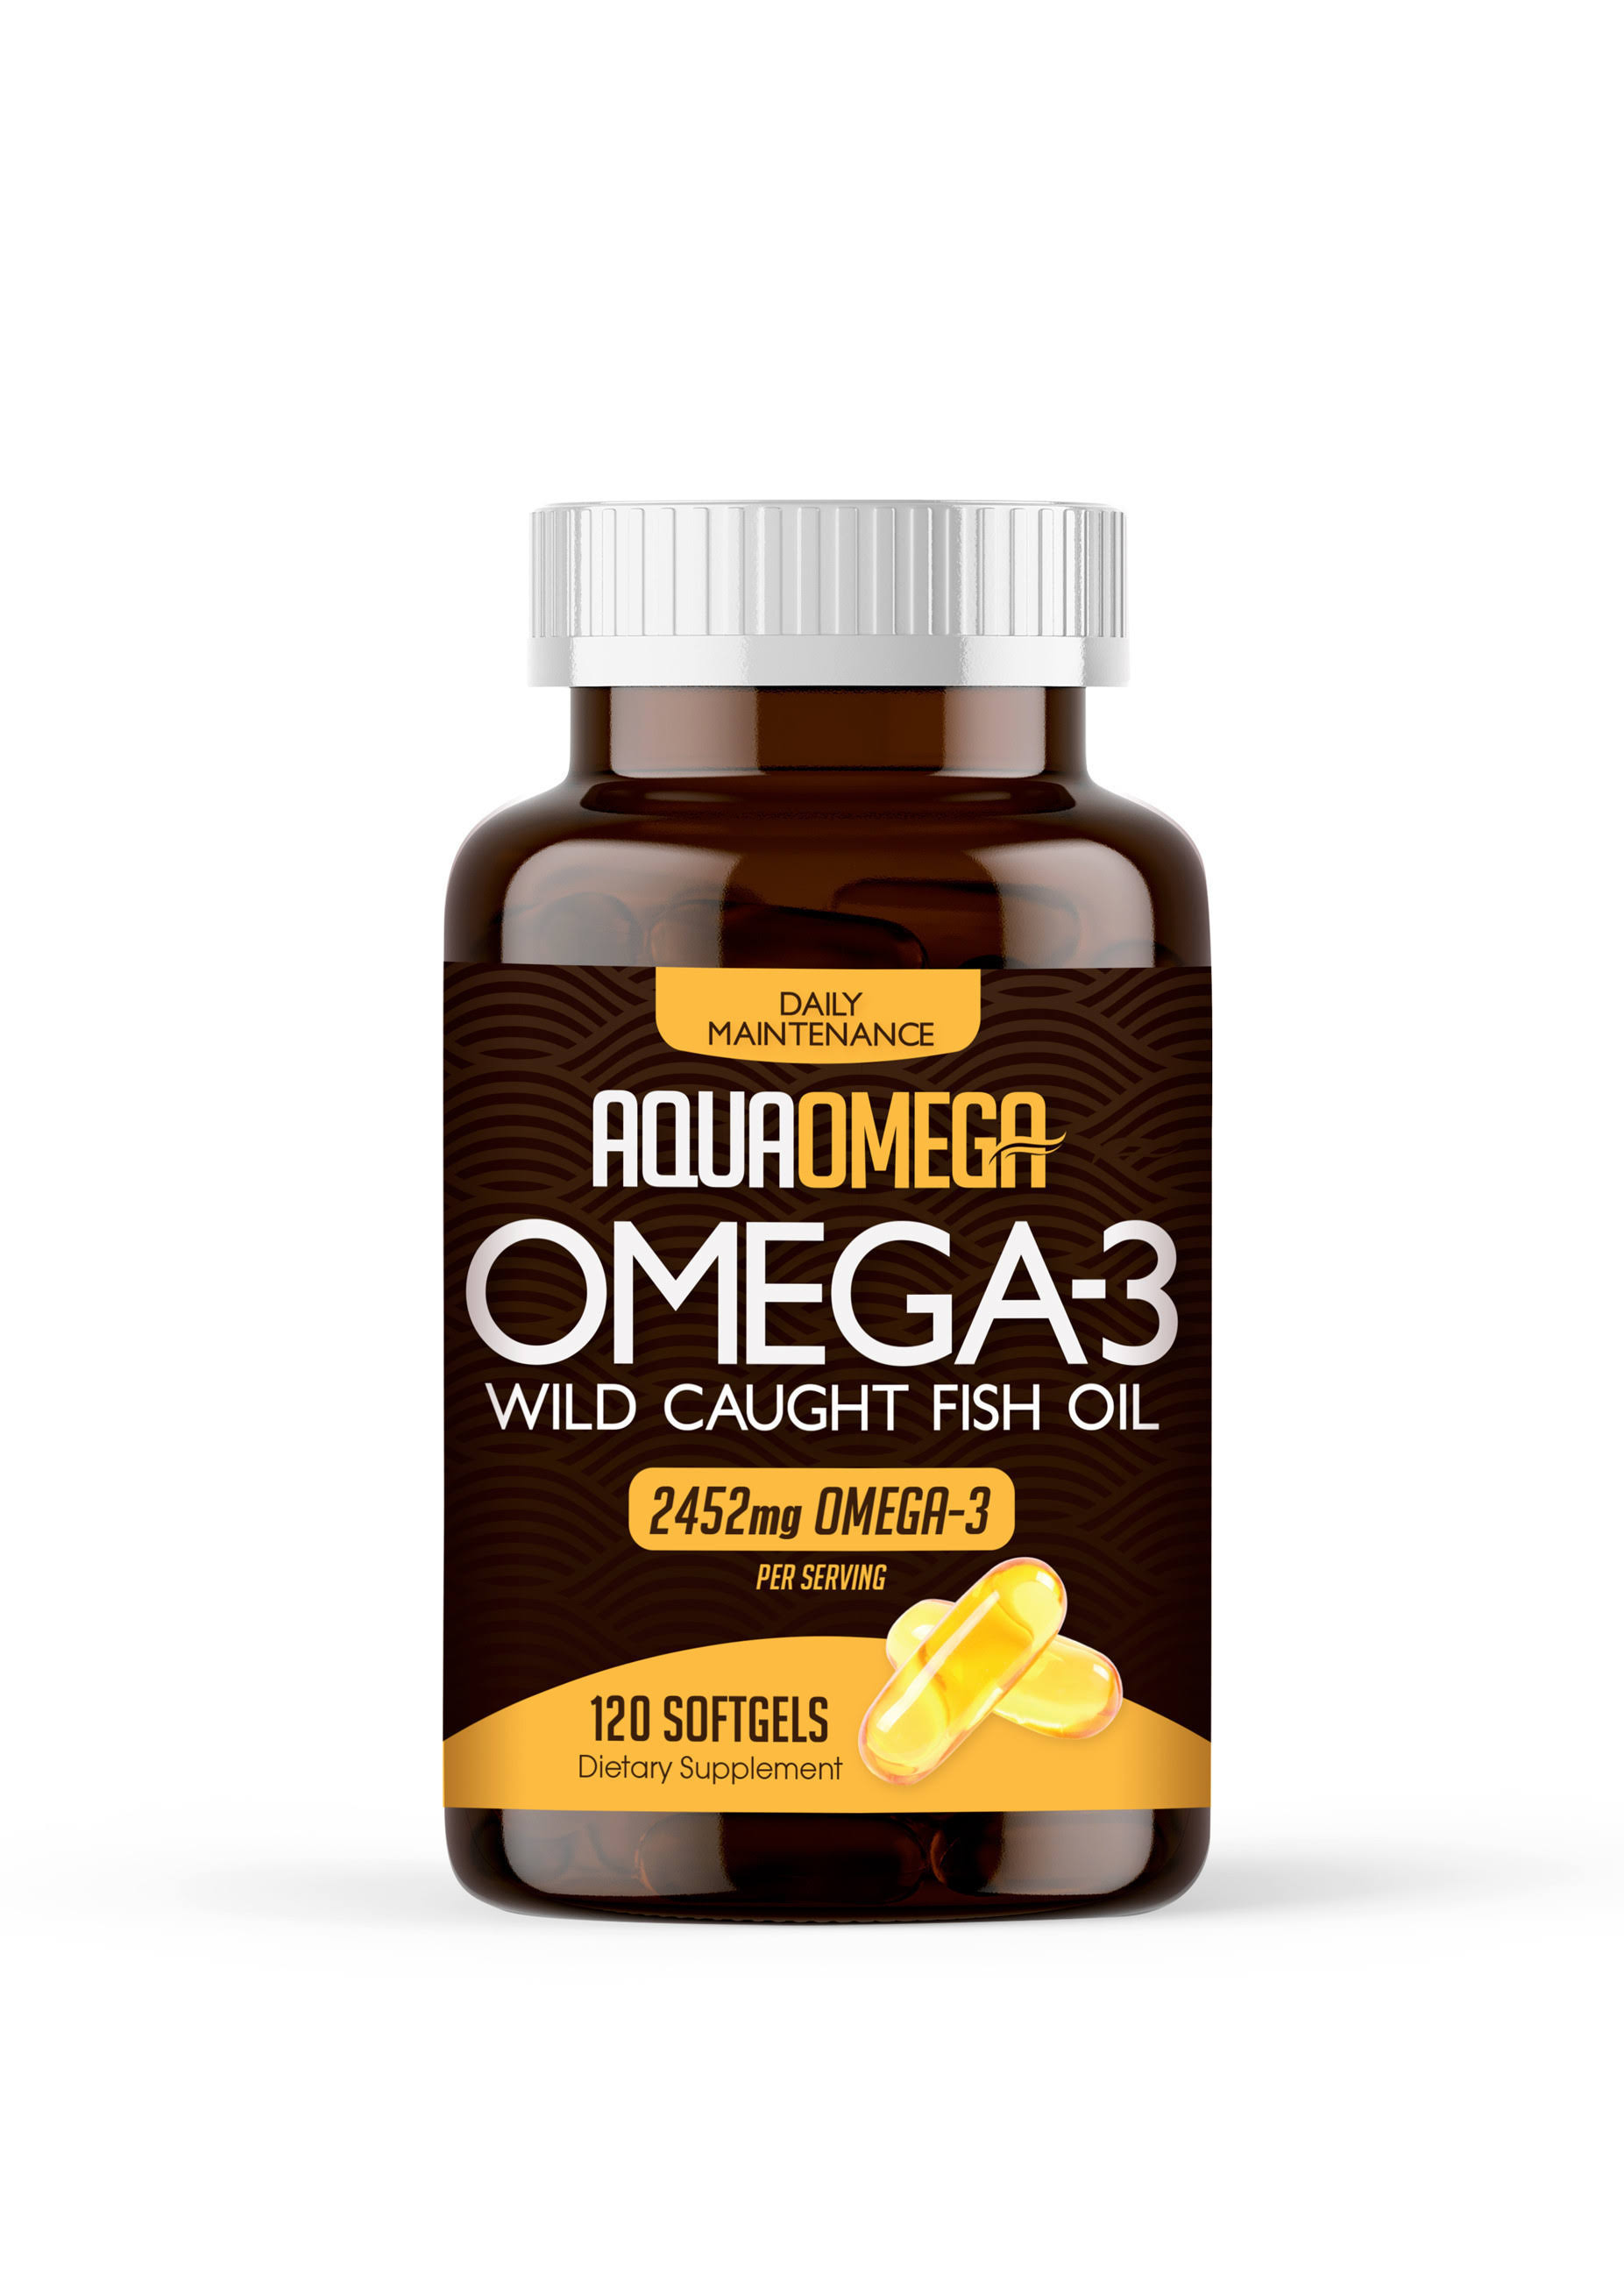 AquaOmega Omega-3 Fish Oil Daily Maintenance 120 Softgels